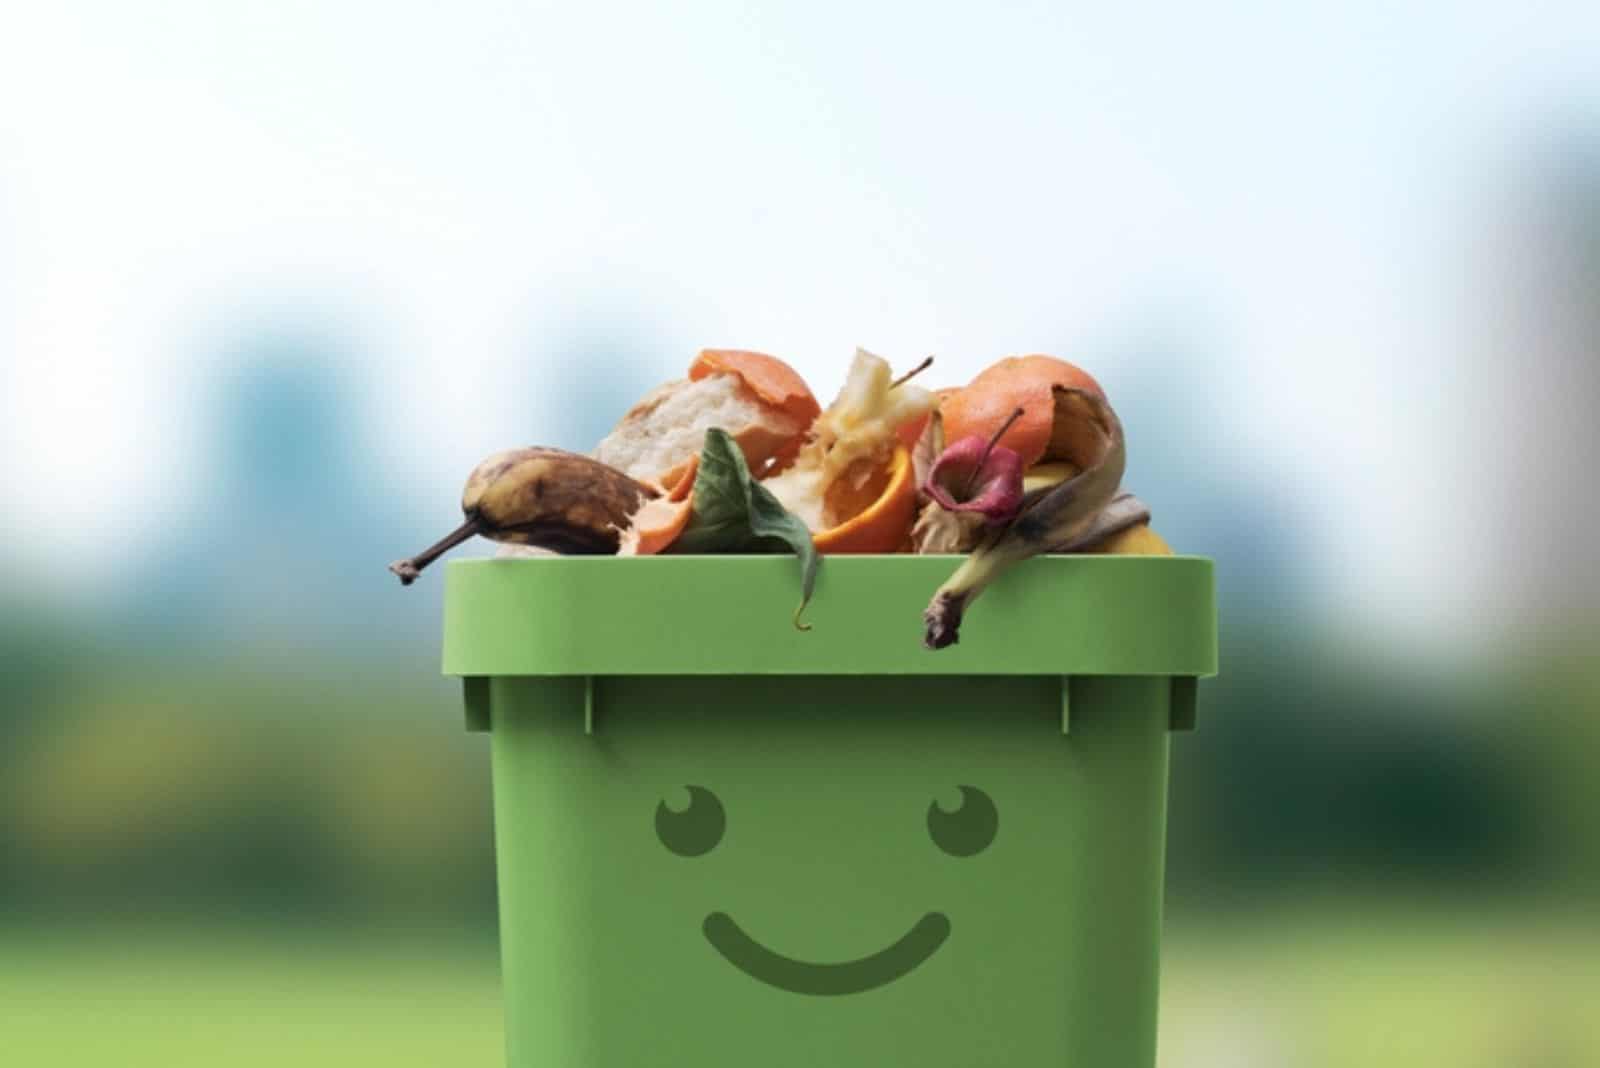 cute garbage bin character full of organic biodegradable waste